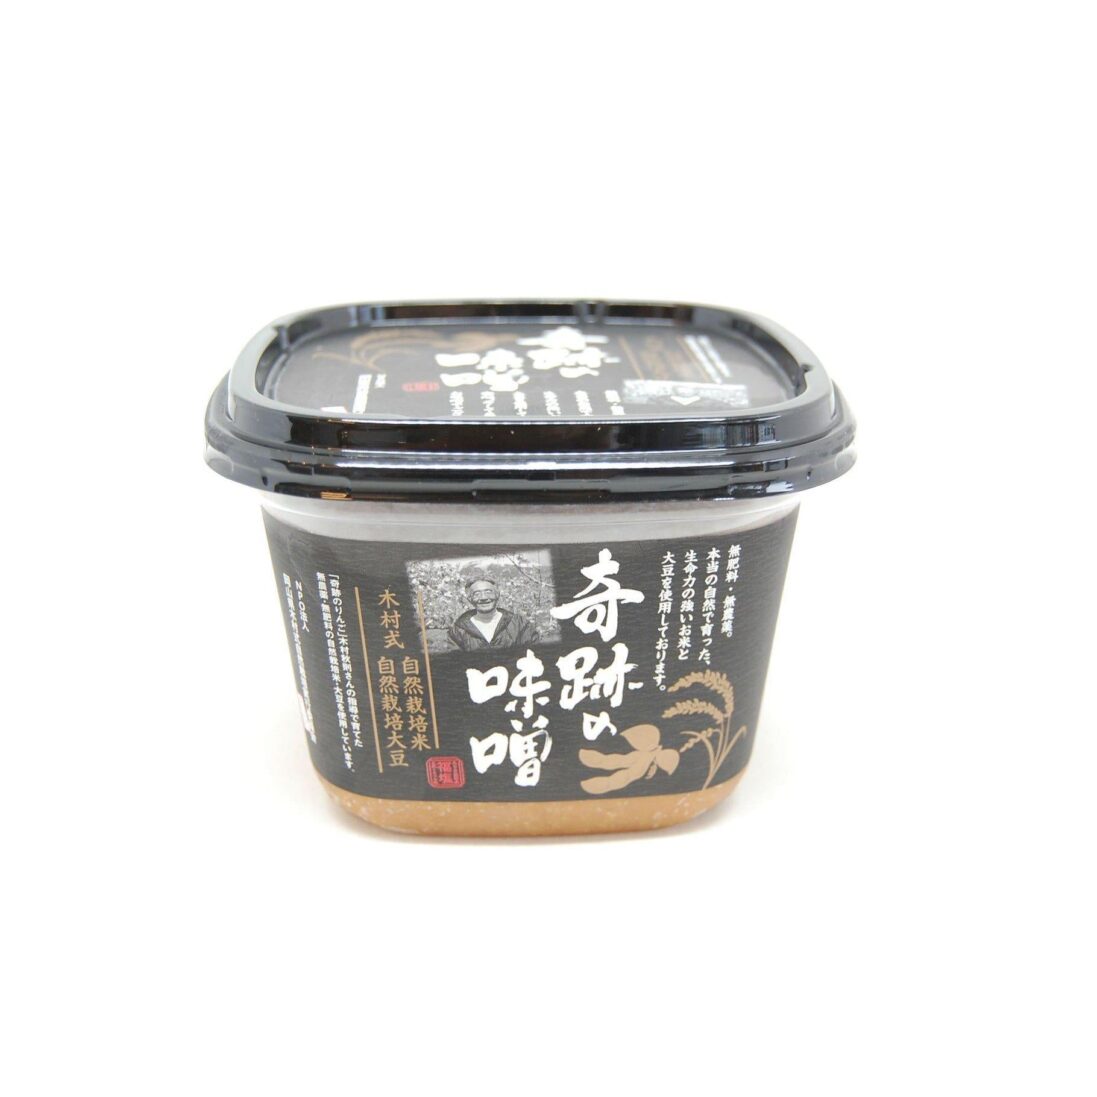 Marumikoji-Kiseki-Natural-Miso-Japanese-Miso-Paste-750g-Japanese-Taste_2048x.jpg